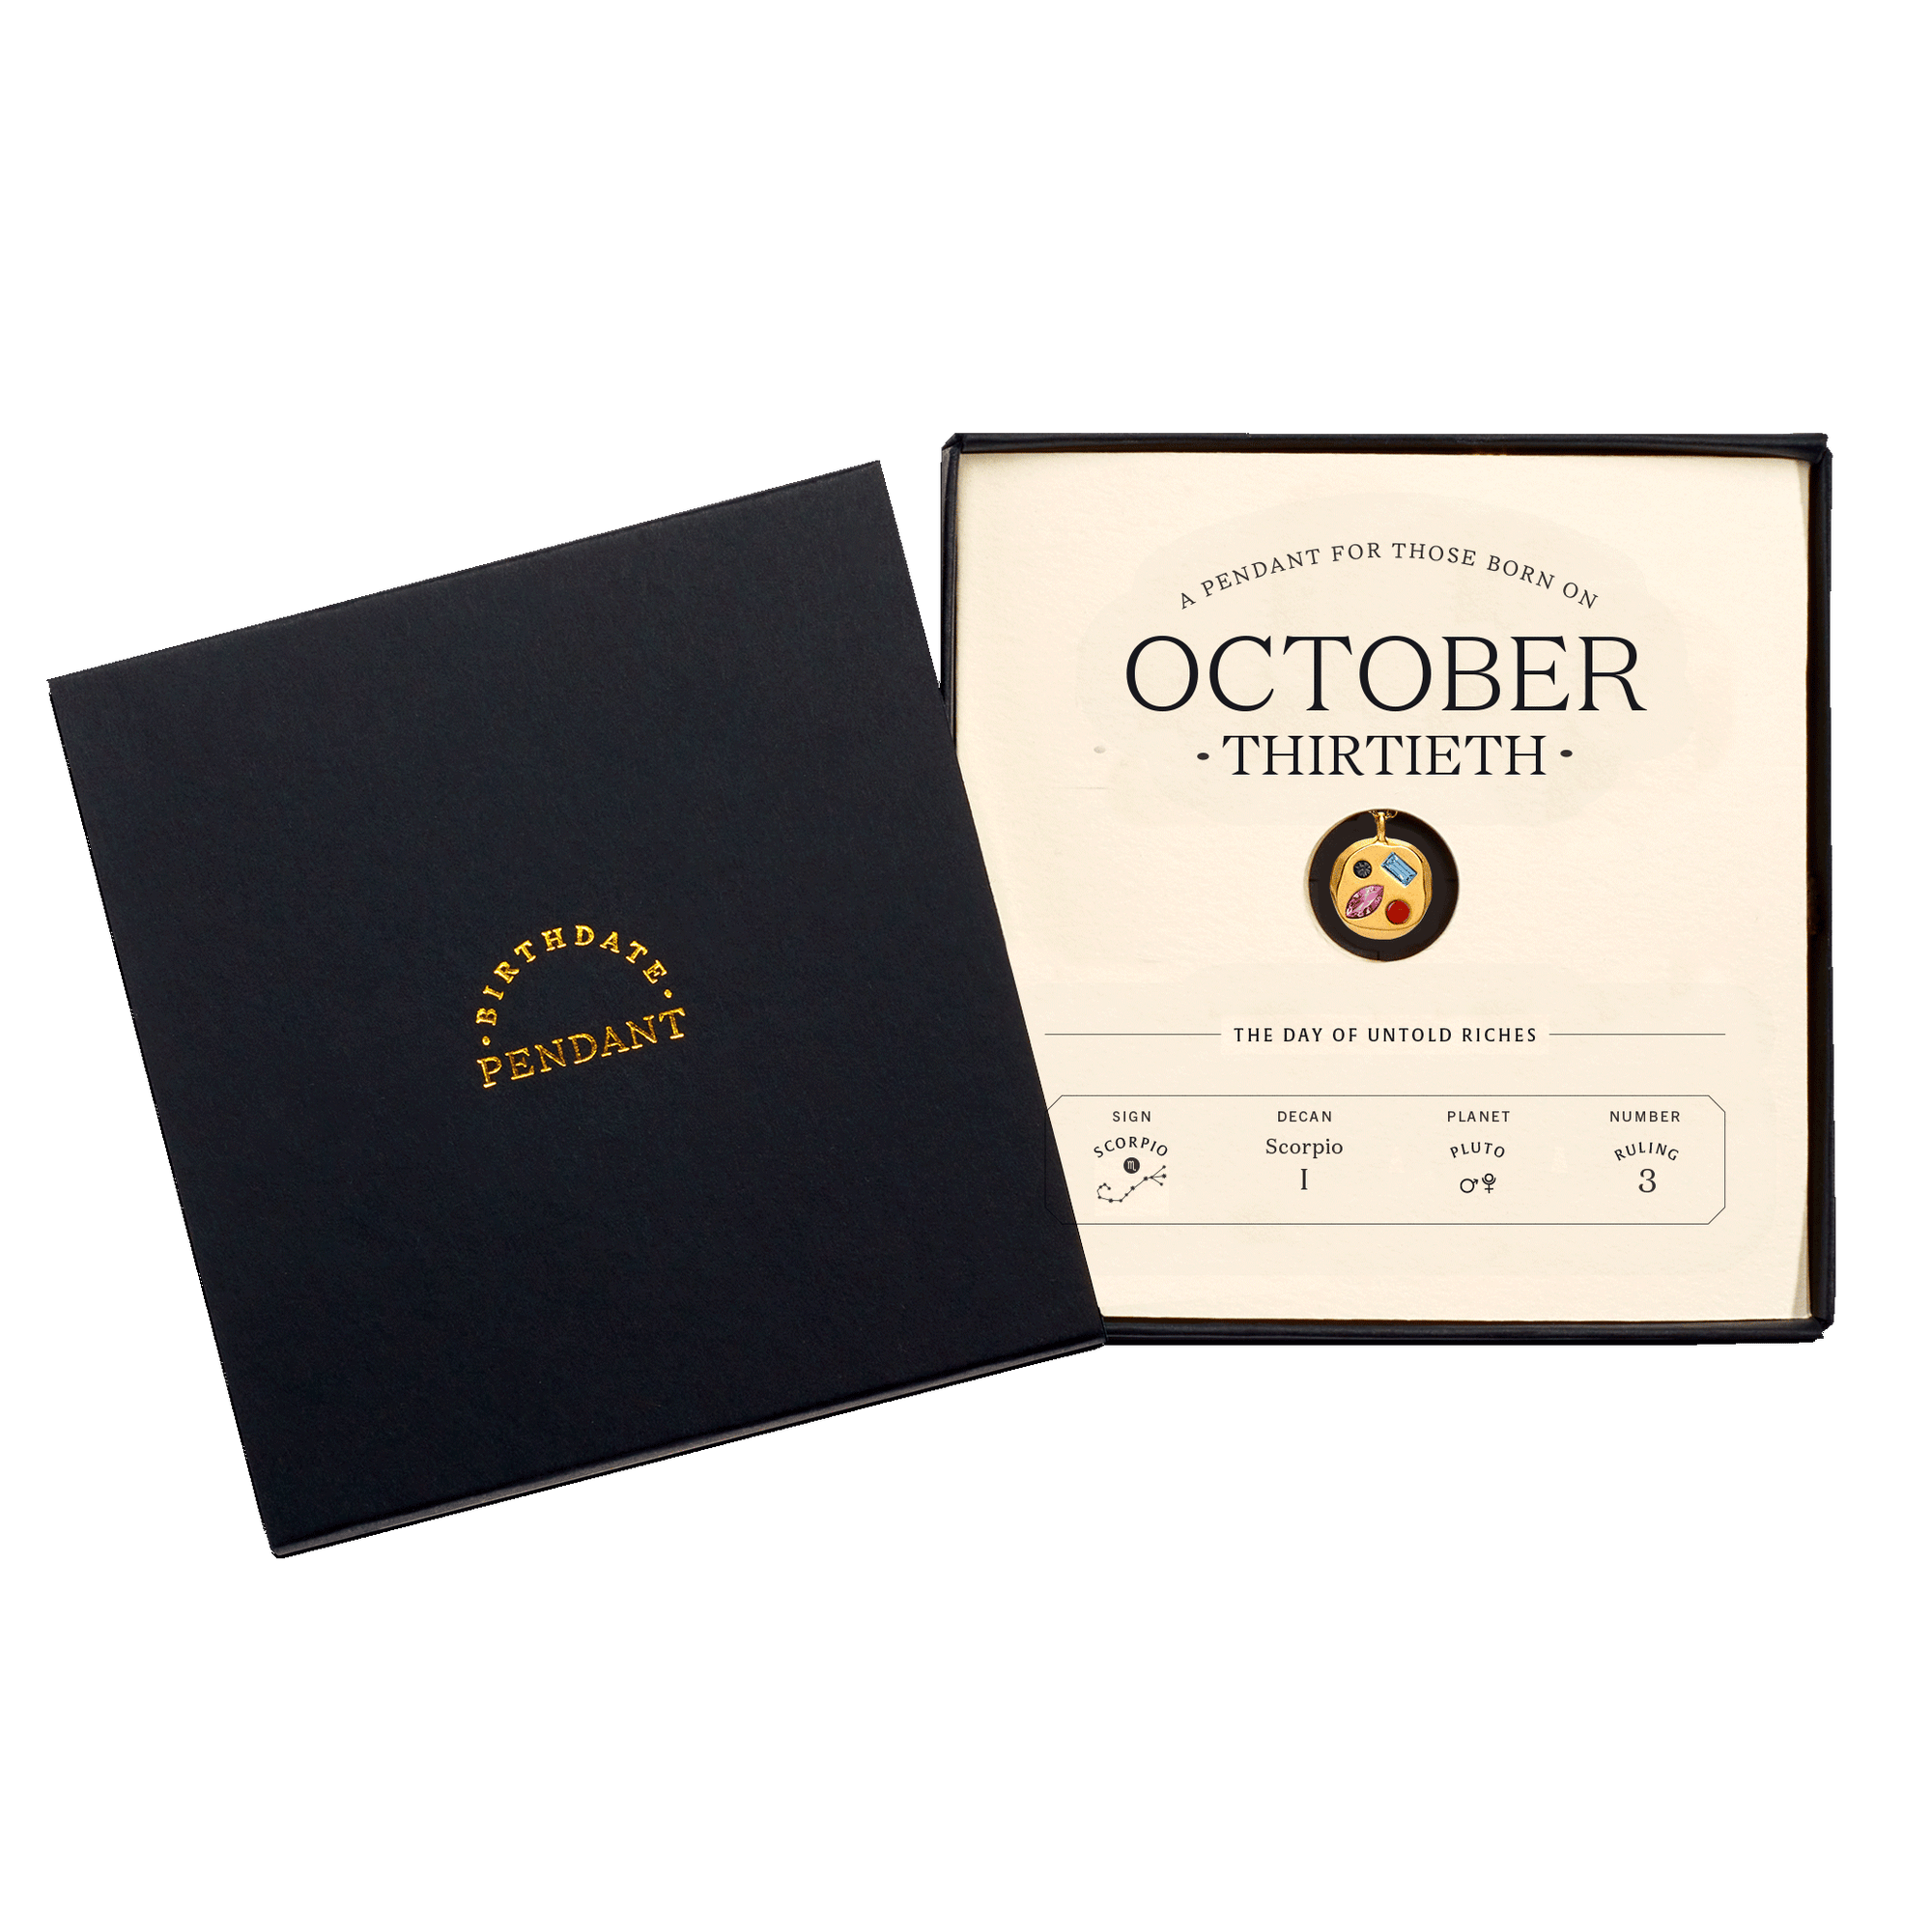 The October Thirtieth Pendant inside its box